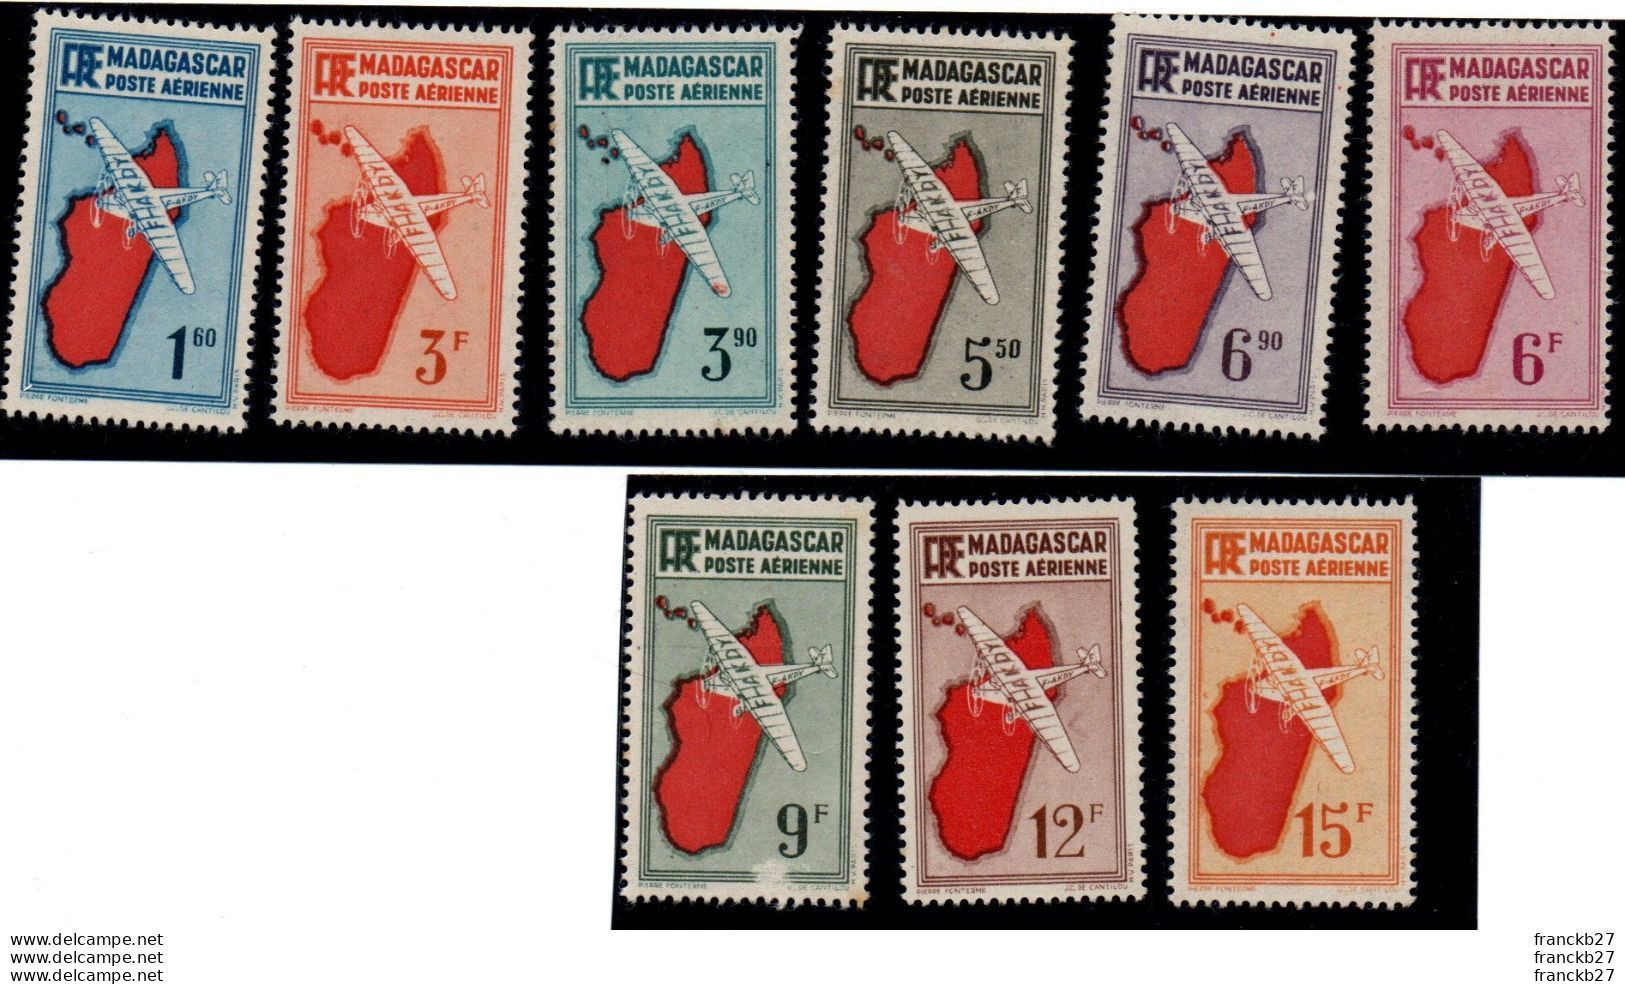 Madagascar - Poste Aérienne - 9 Timbres - 1.6 - 3 3.9 - 5.5 - 6.9 - 6 - 9 - 12 - 15 F - Neufs